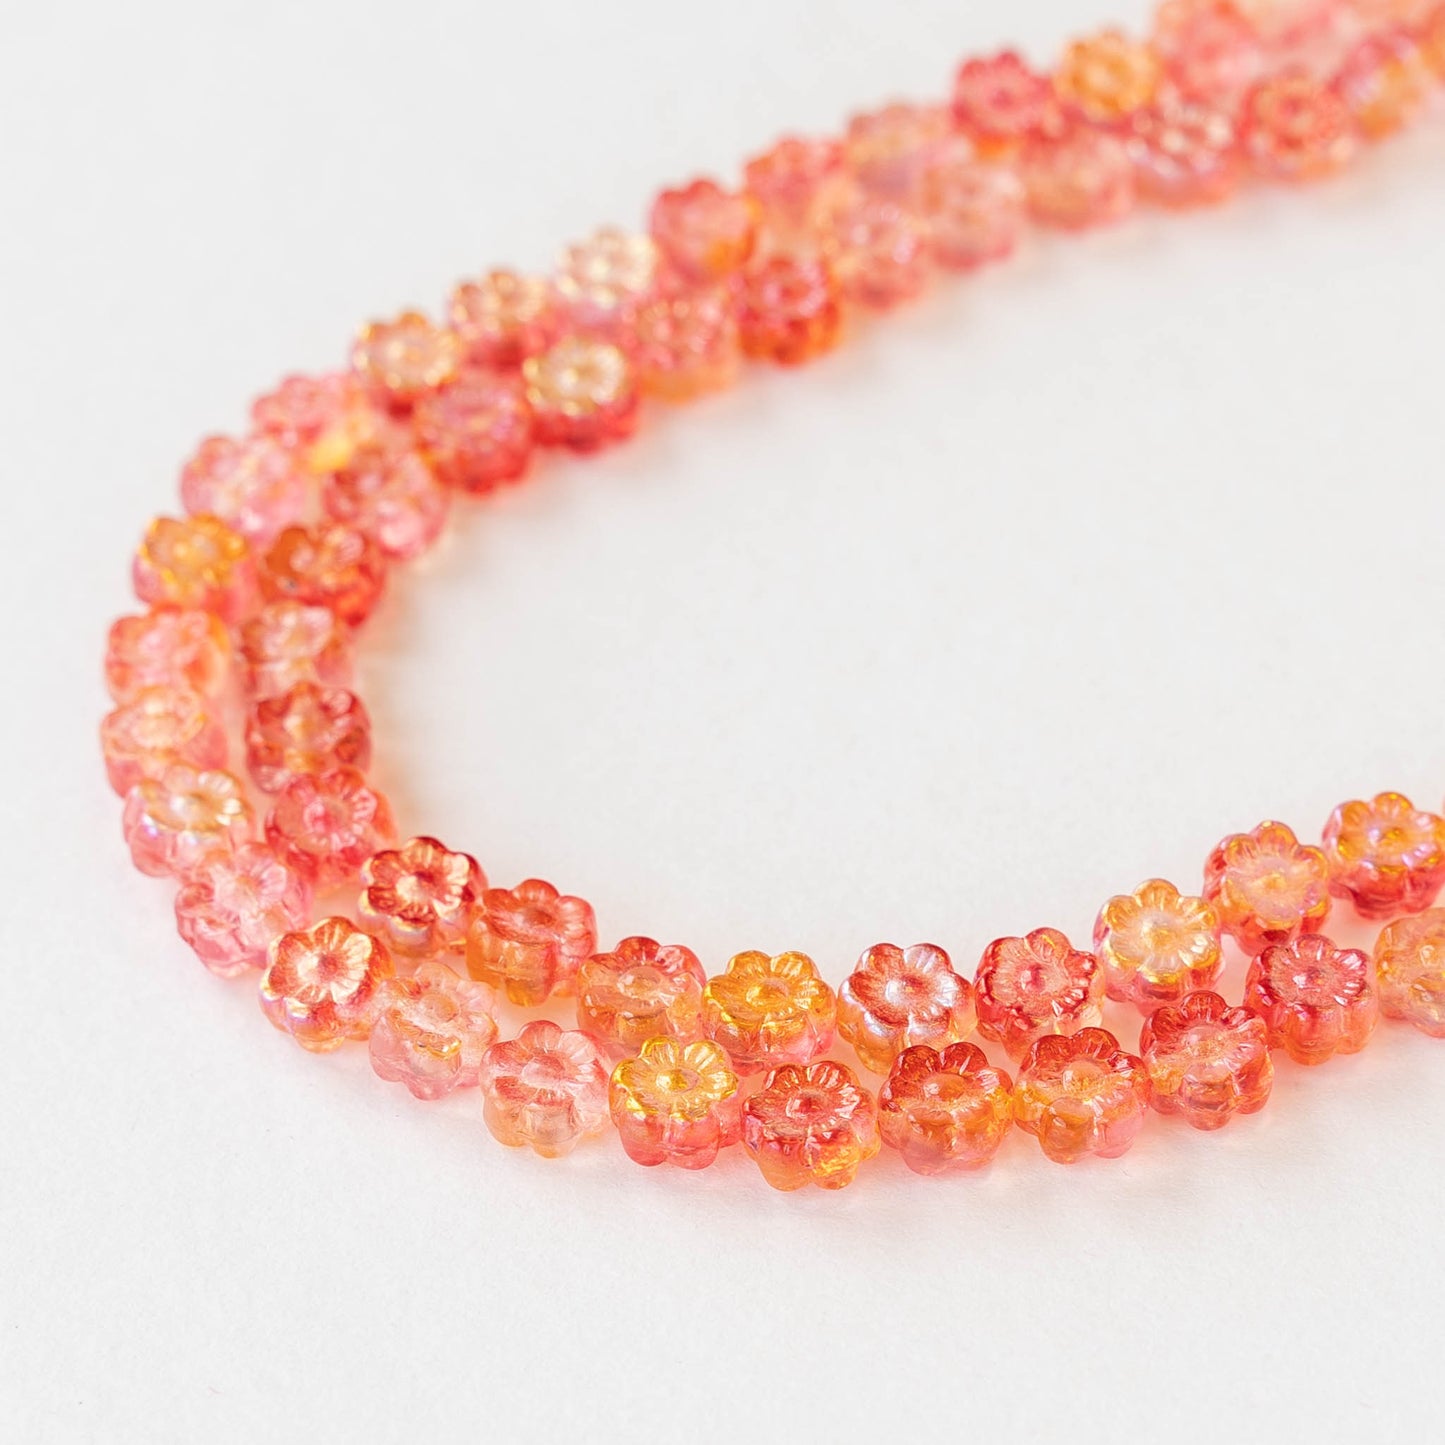 6mm Glass Flower Beads - Pink Orange Luster Mix - 30 beads